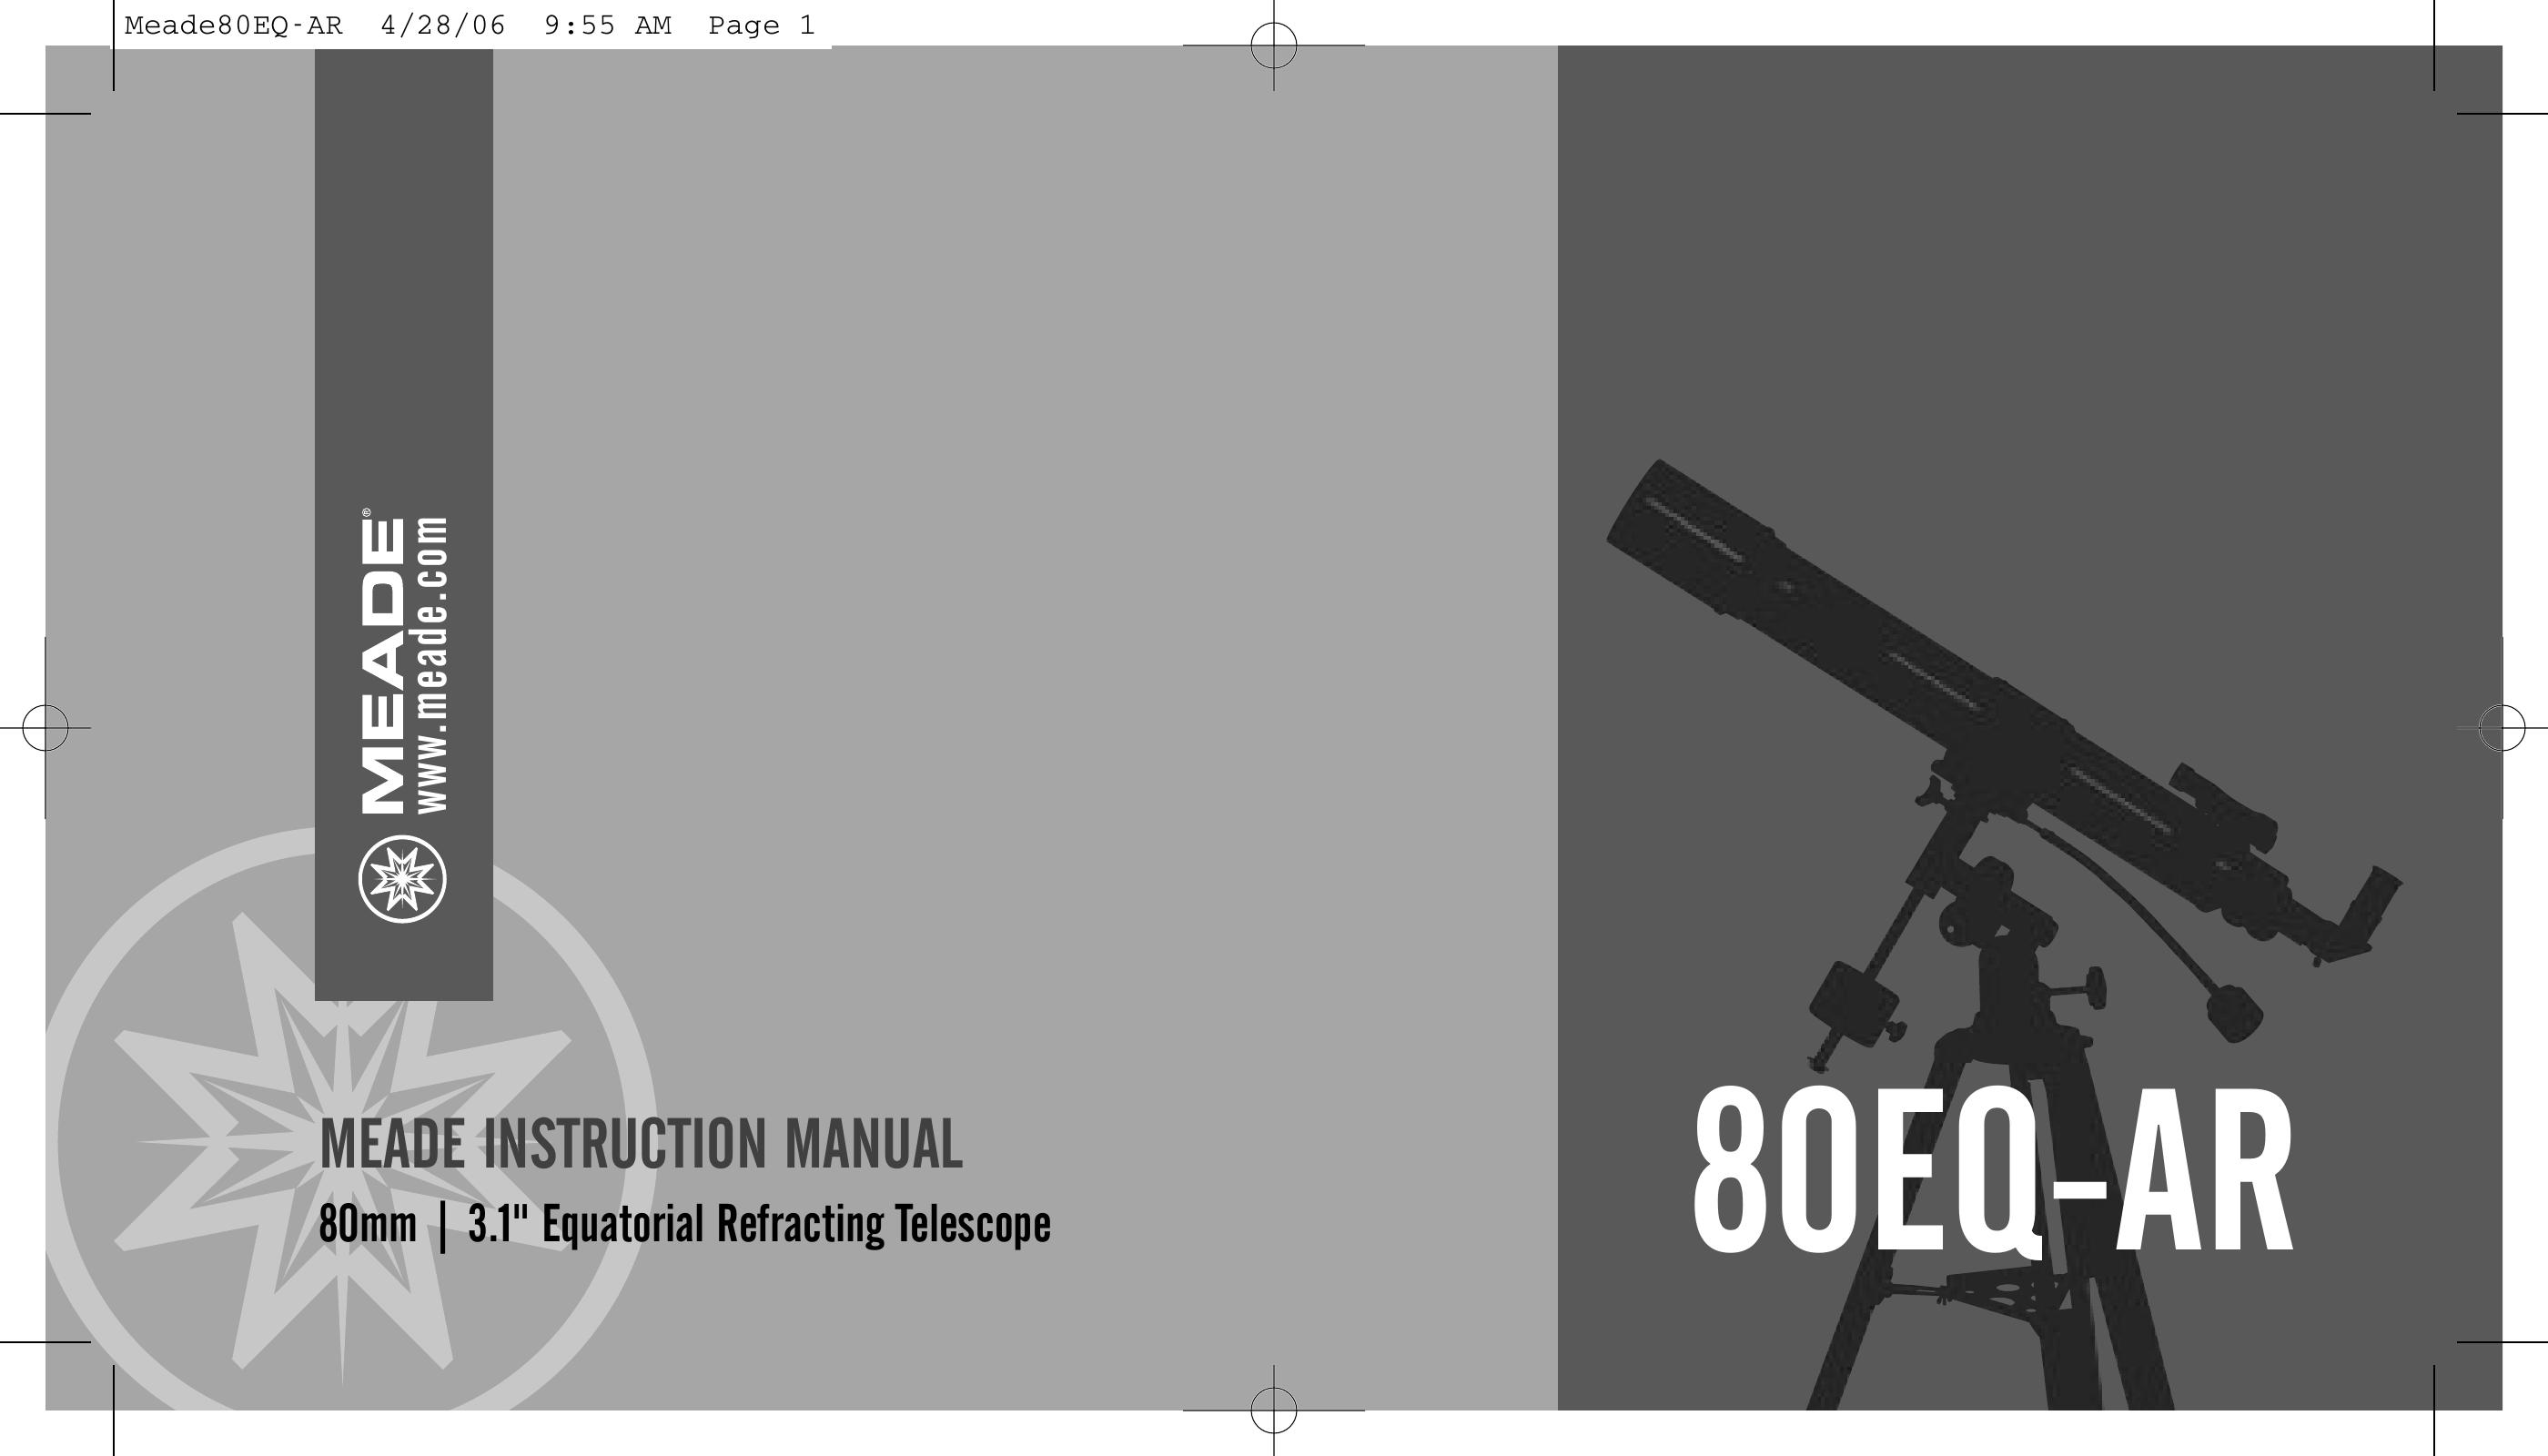 Meade 80EQ-AR Telescope User Manual